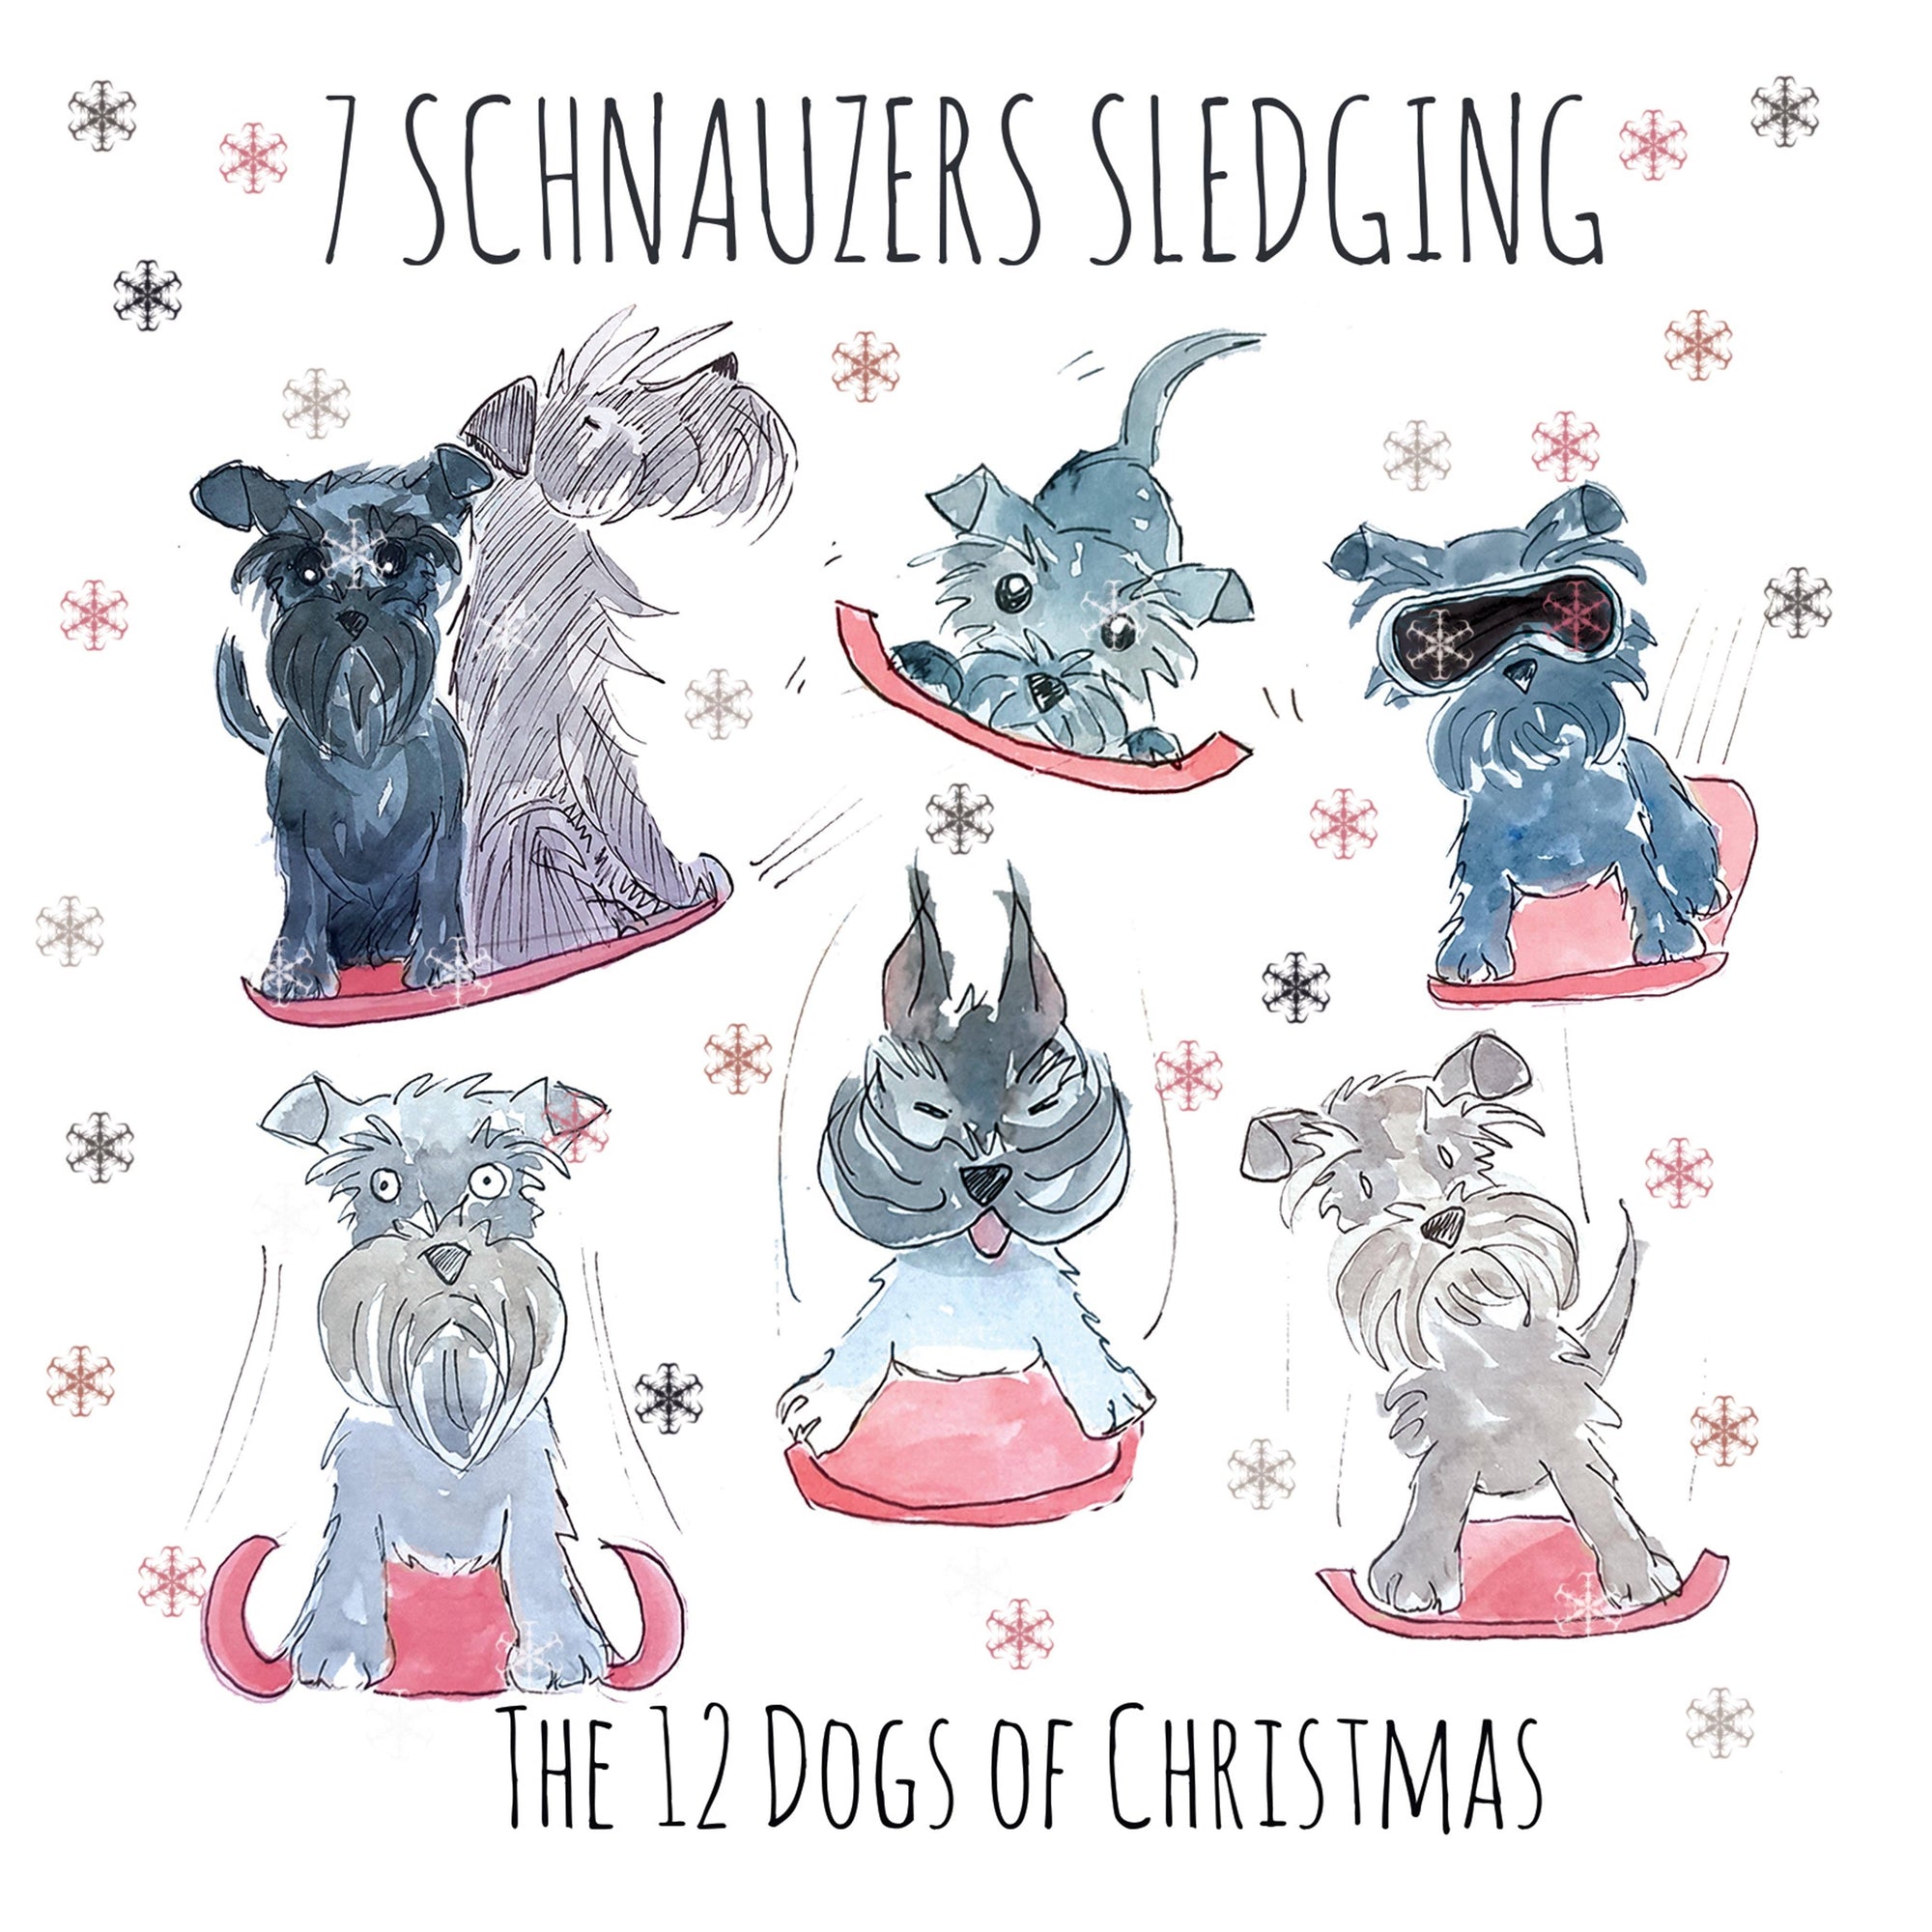 7 Schnauzers Sledging Christmas Card